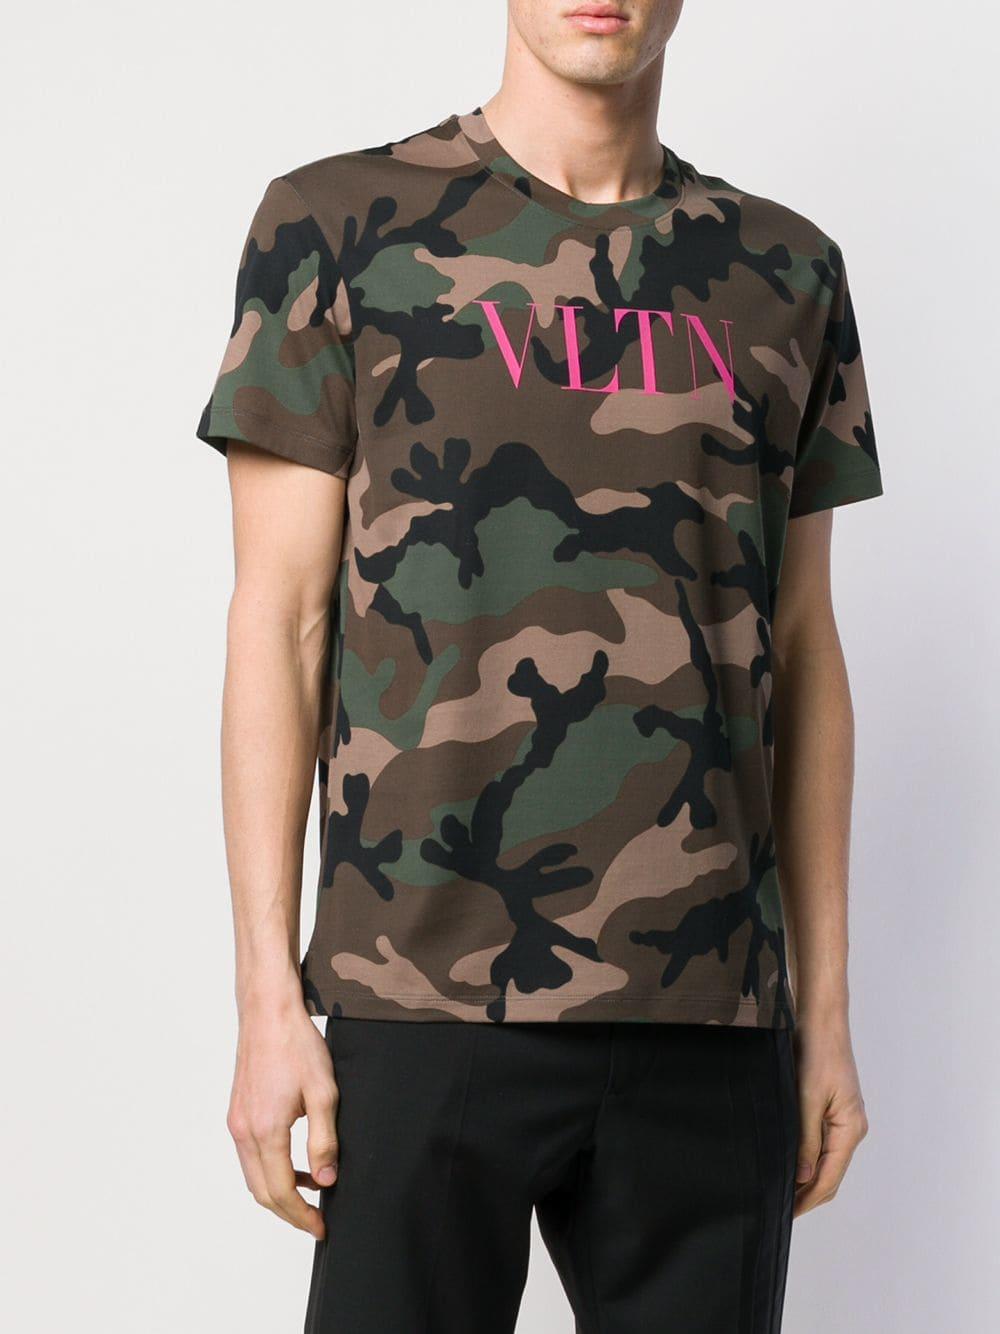 Valentino Cotton Vltn Camouflage T-shirt in Green for Men - Lyst